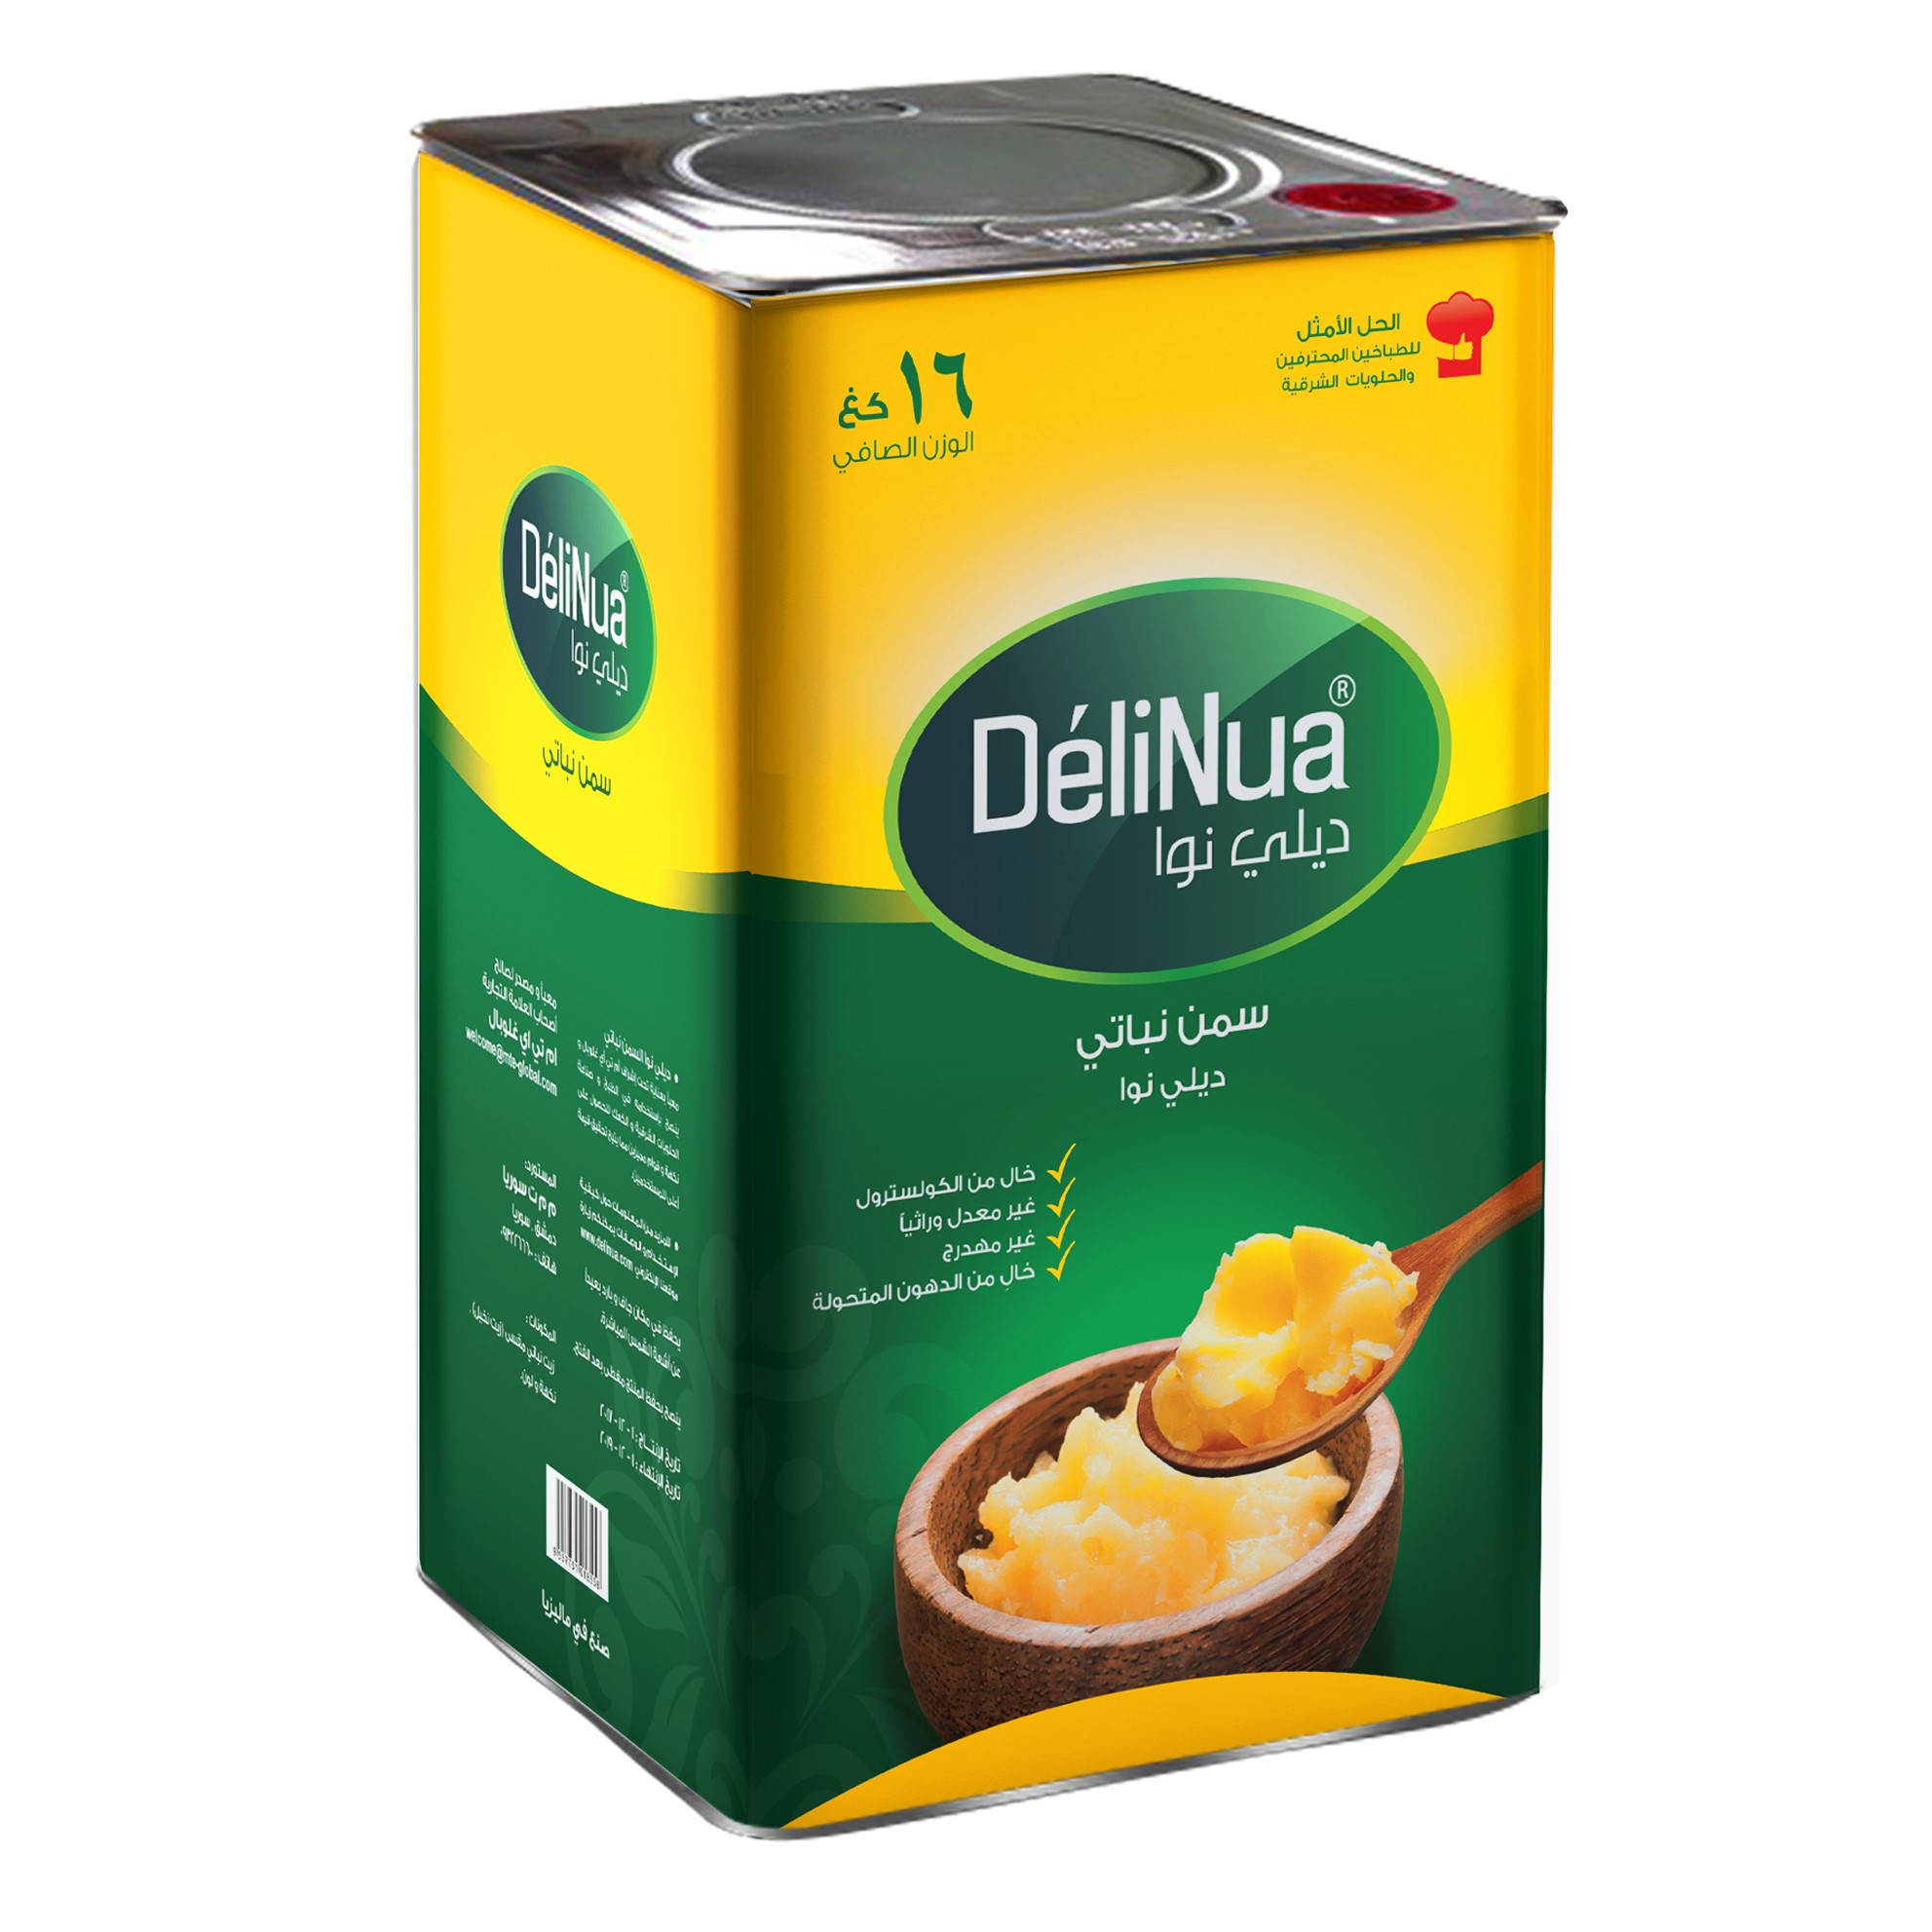 DeliNua Vegetable Ghee Packed in 16 Kg Tin